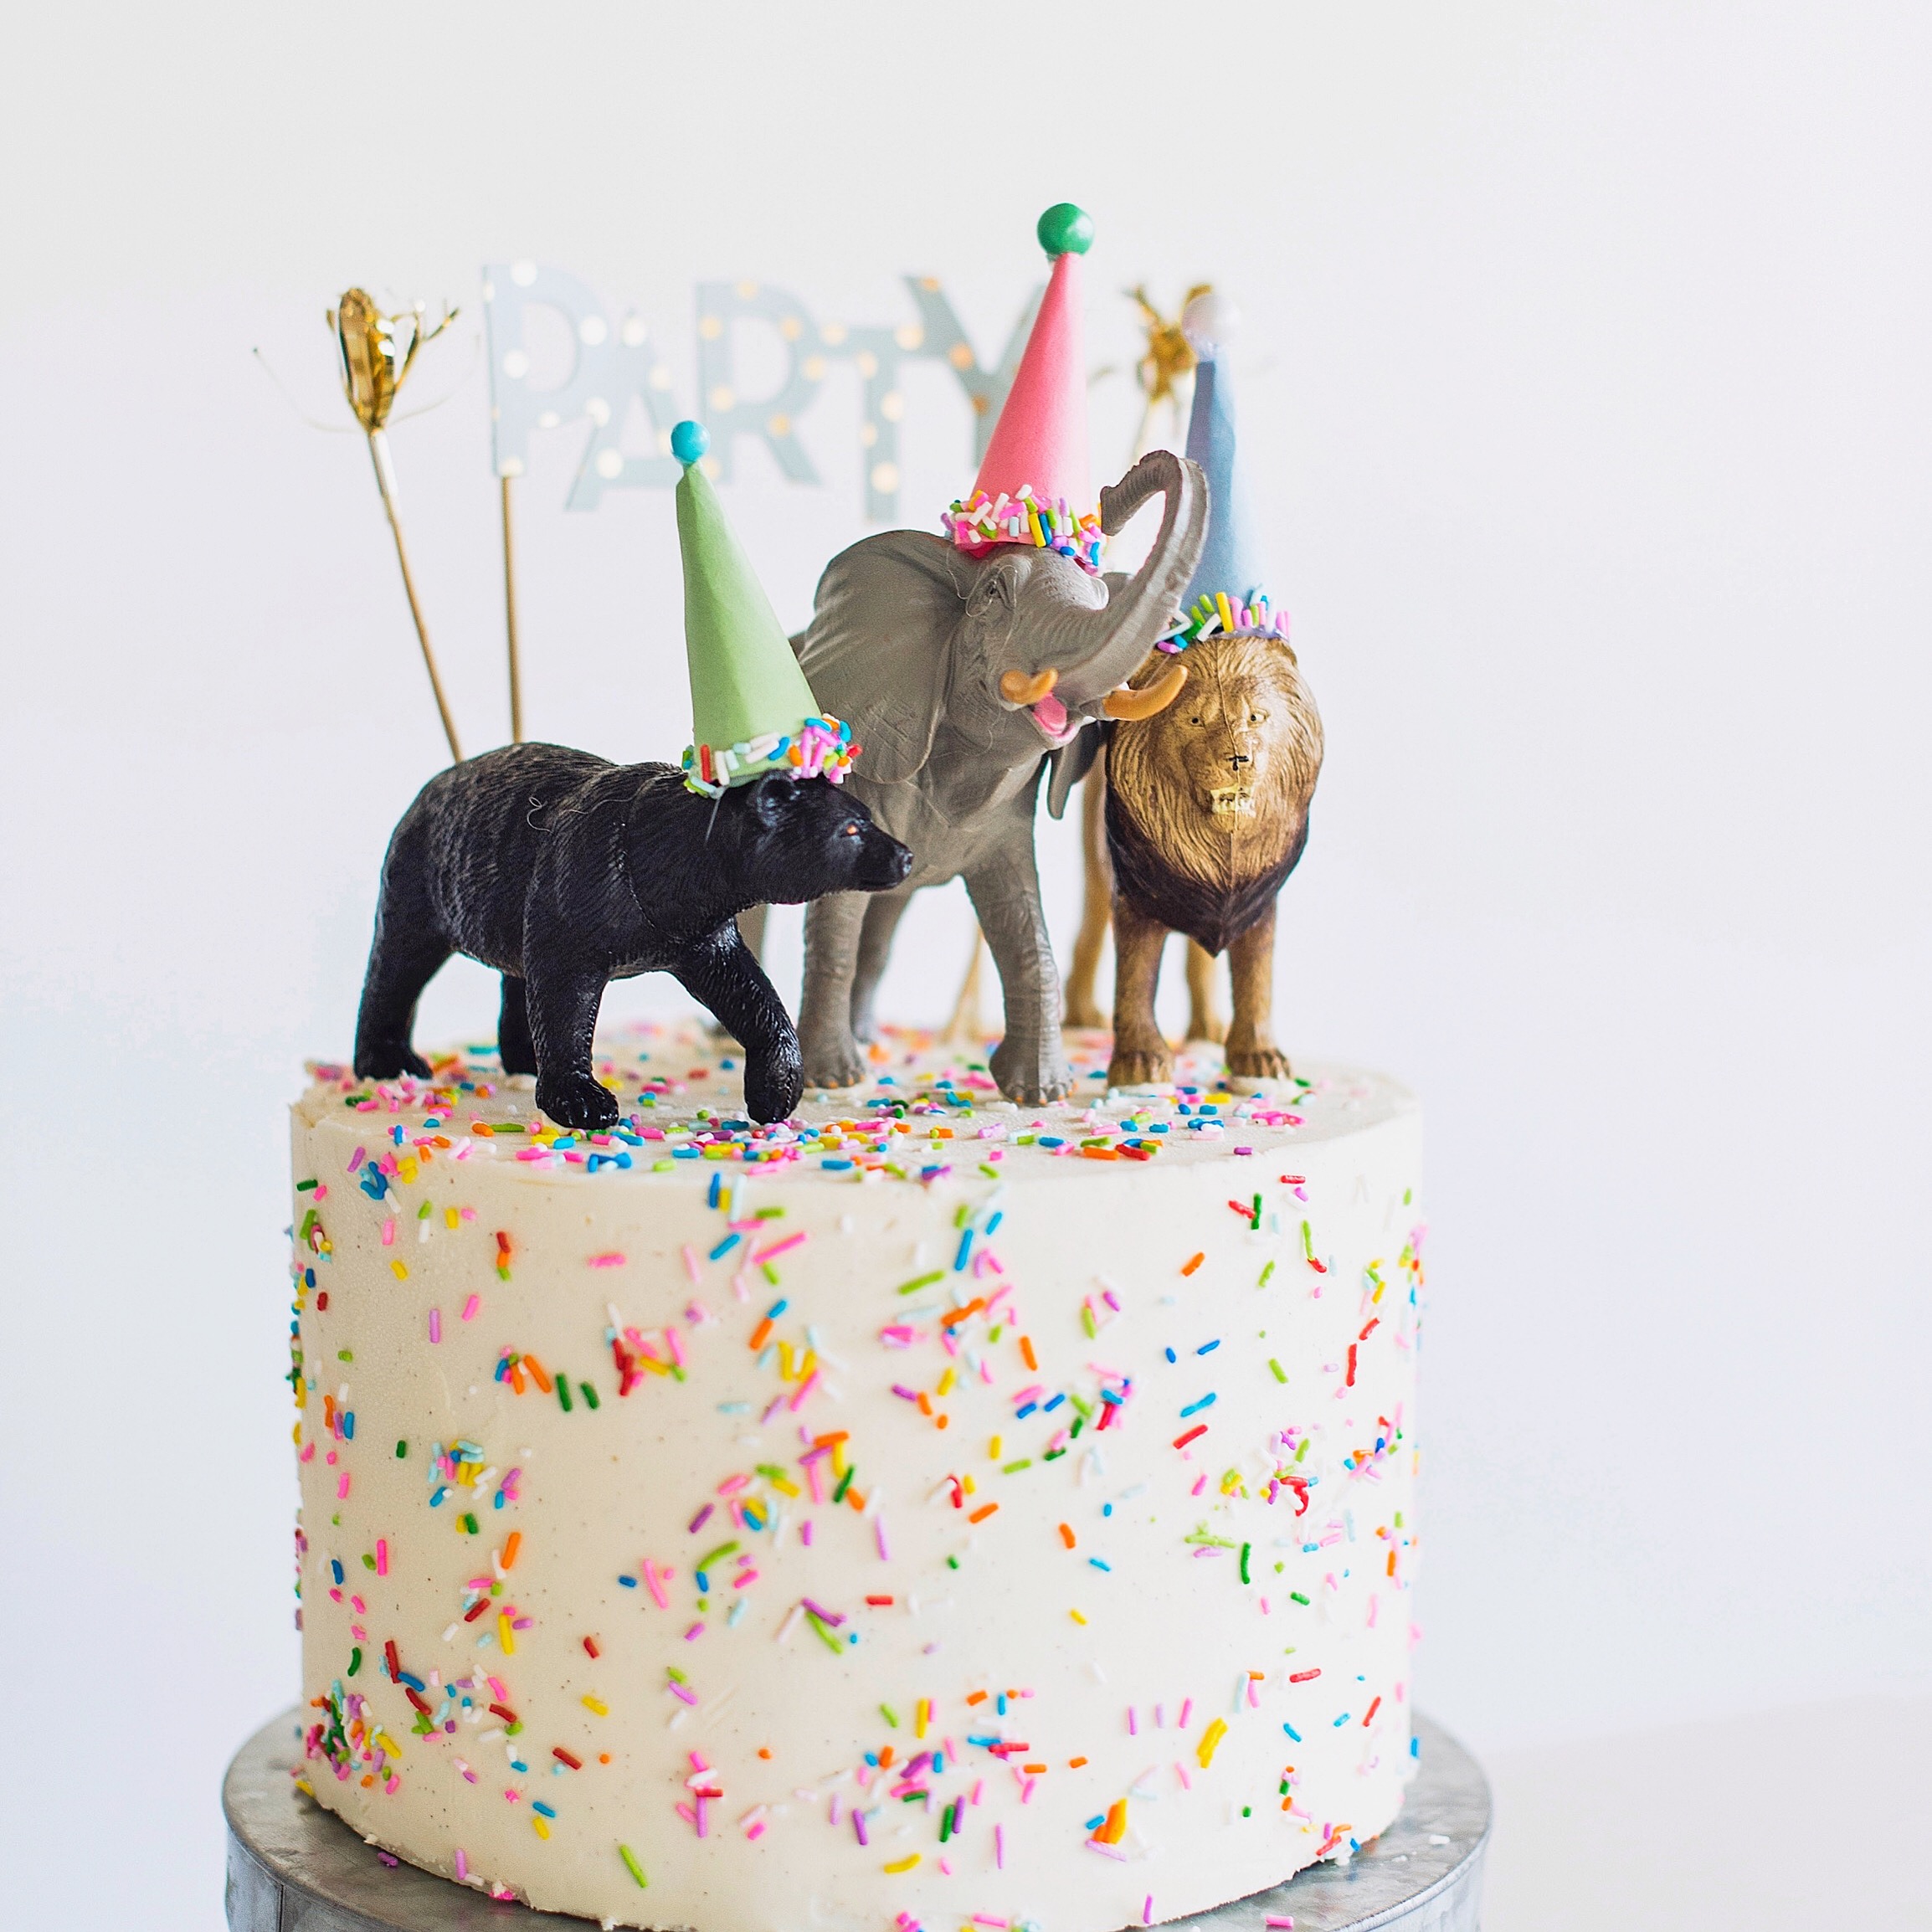 Party animal cake | Cake by Courtney